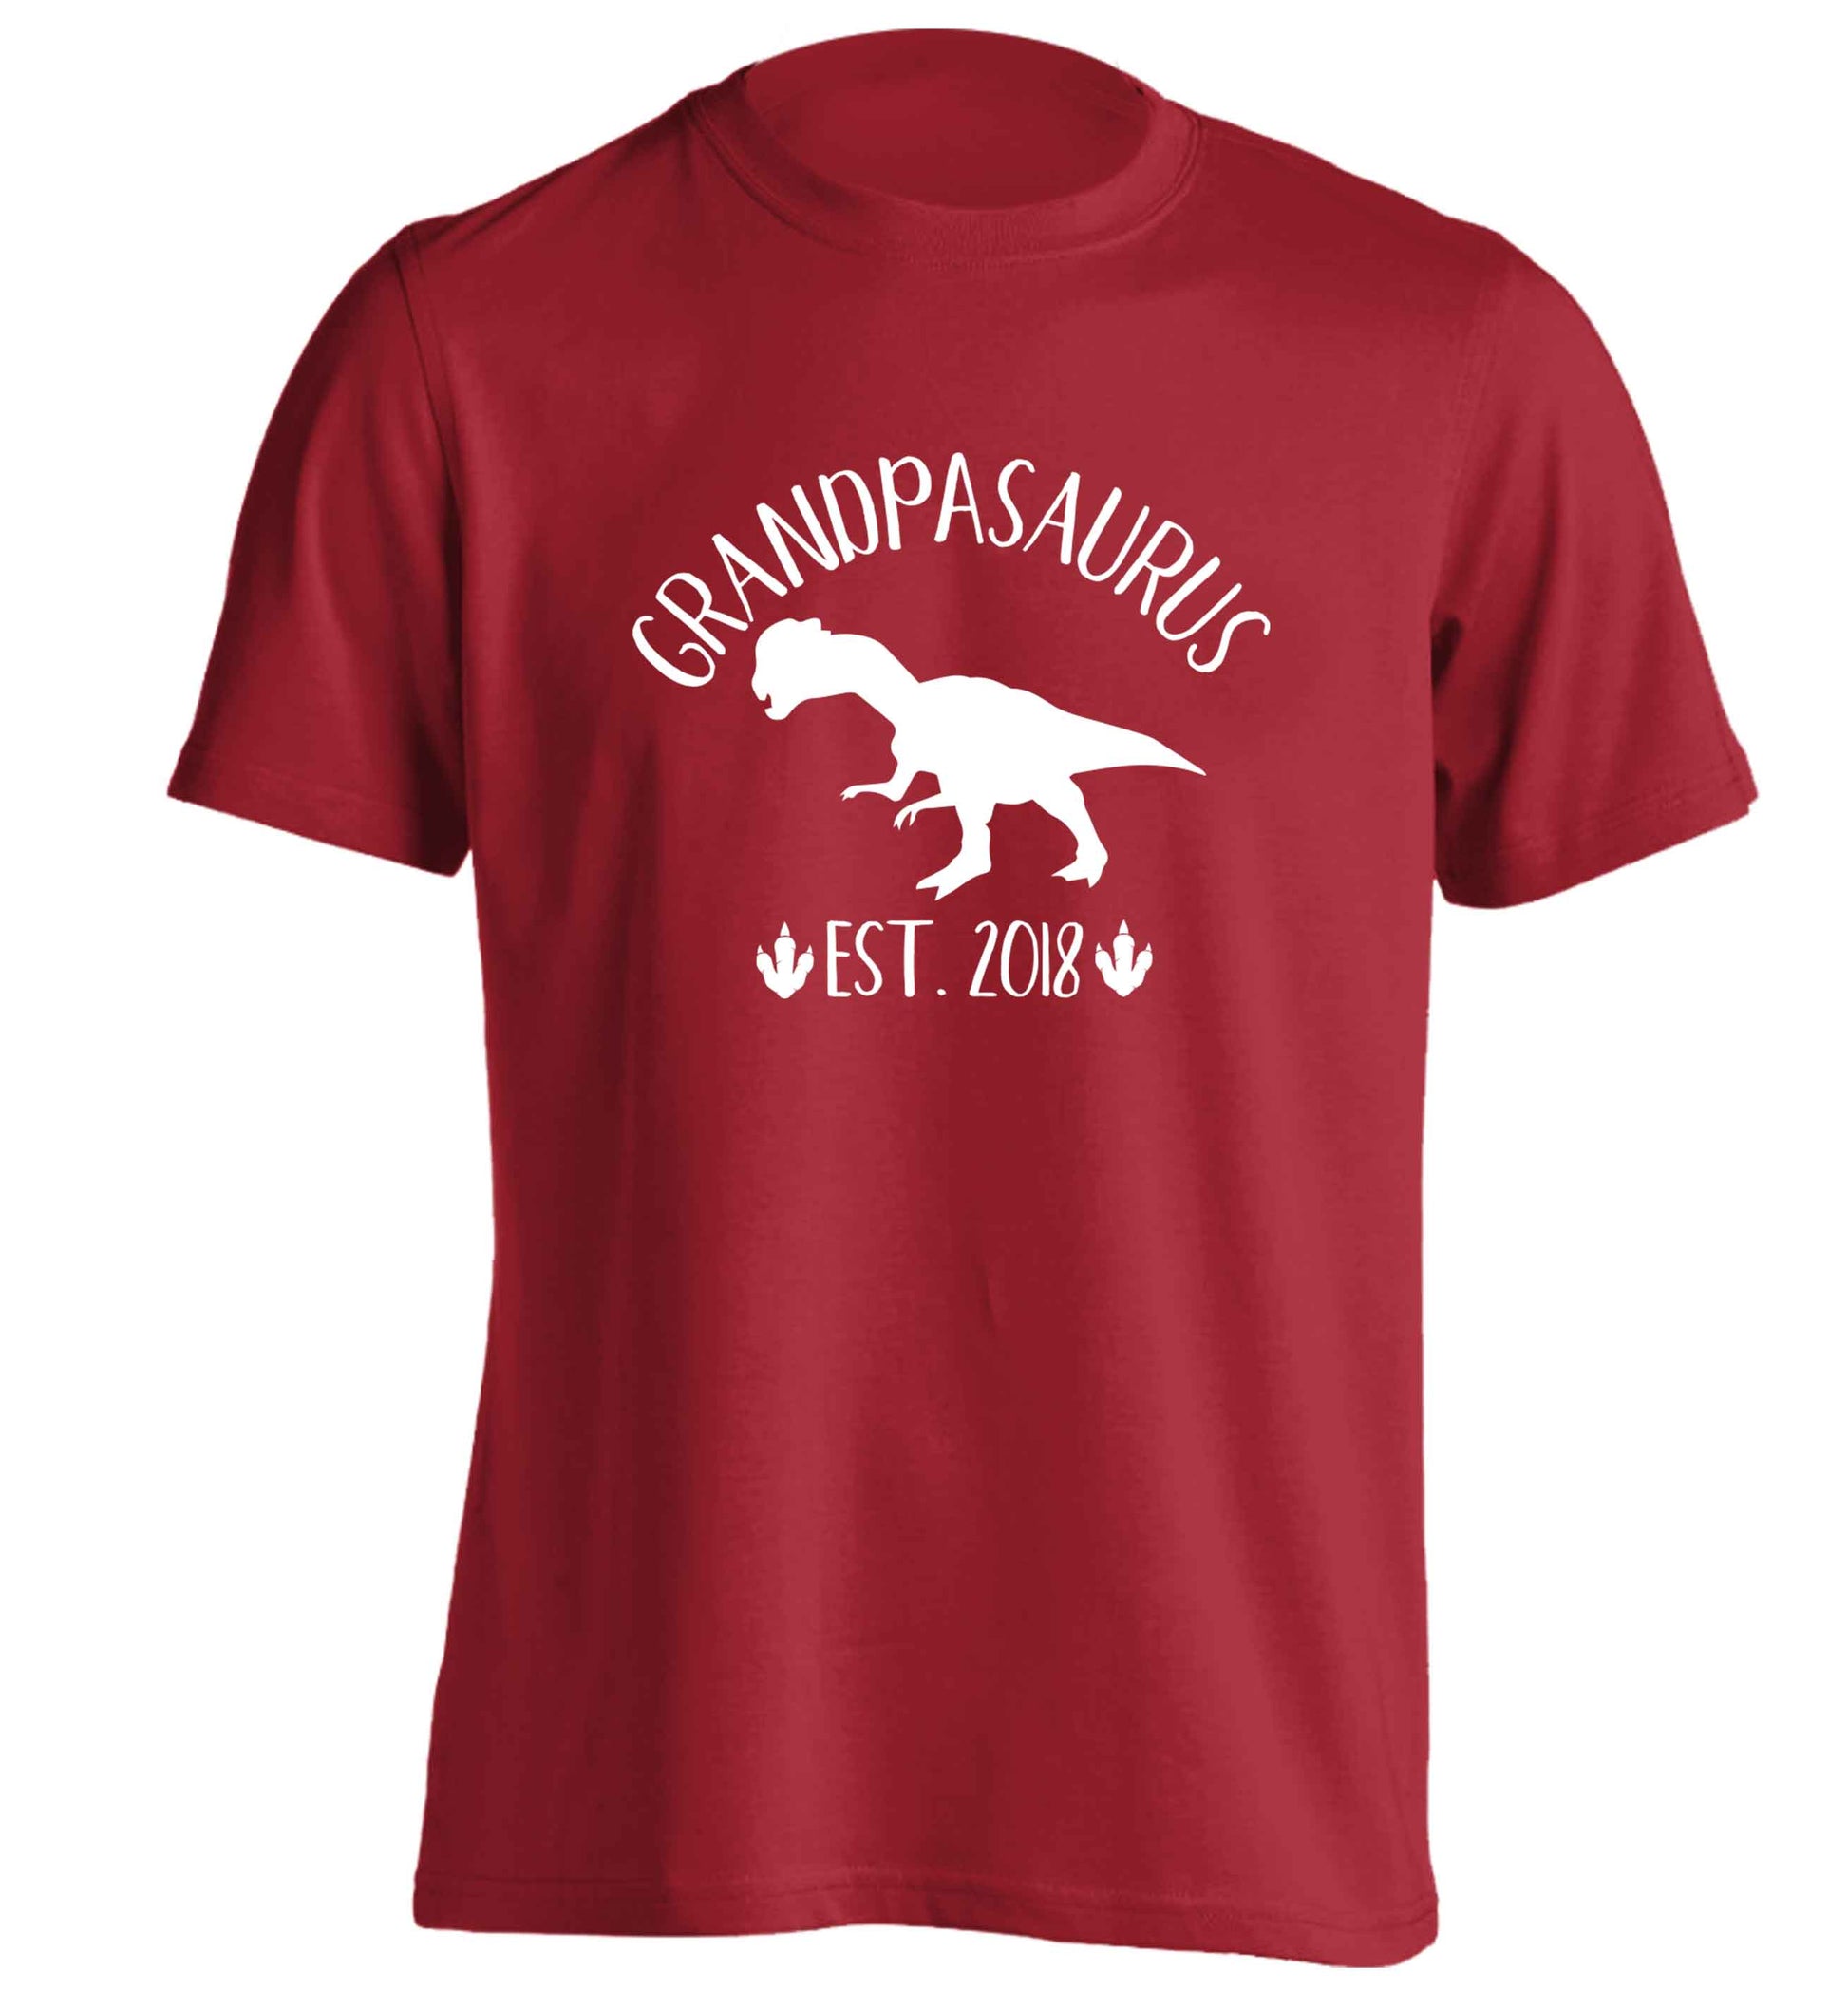 Personalised grandpasaurus since (custom date) adults unisex red Tshirt 2XL